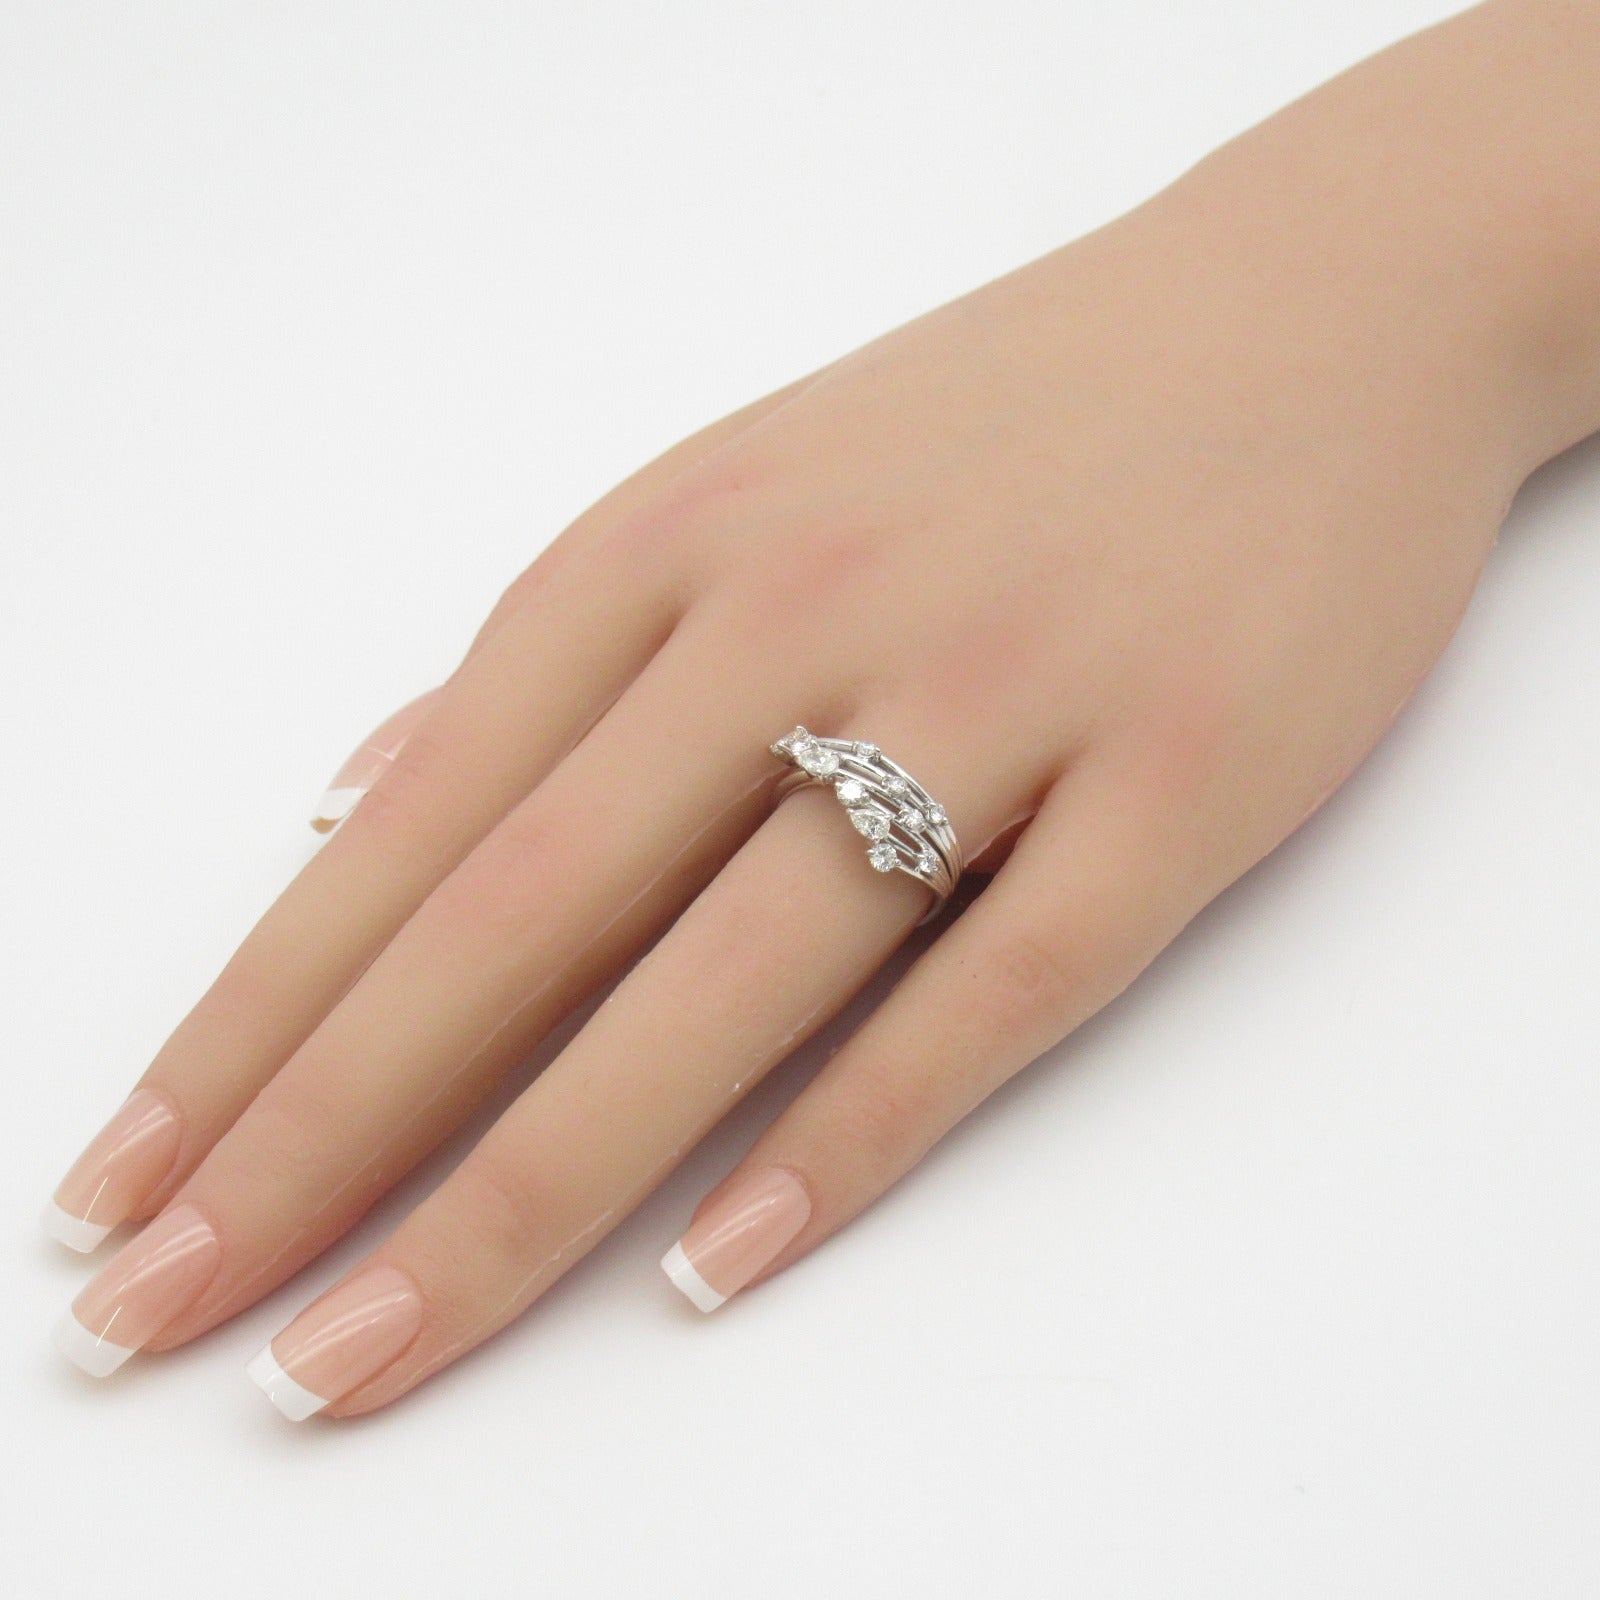 Jewelry Jewelry Diamond Ring Ring Ring Jewelry K18WG (White G) Diamond  Clear Diamond 6.8g